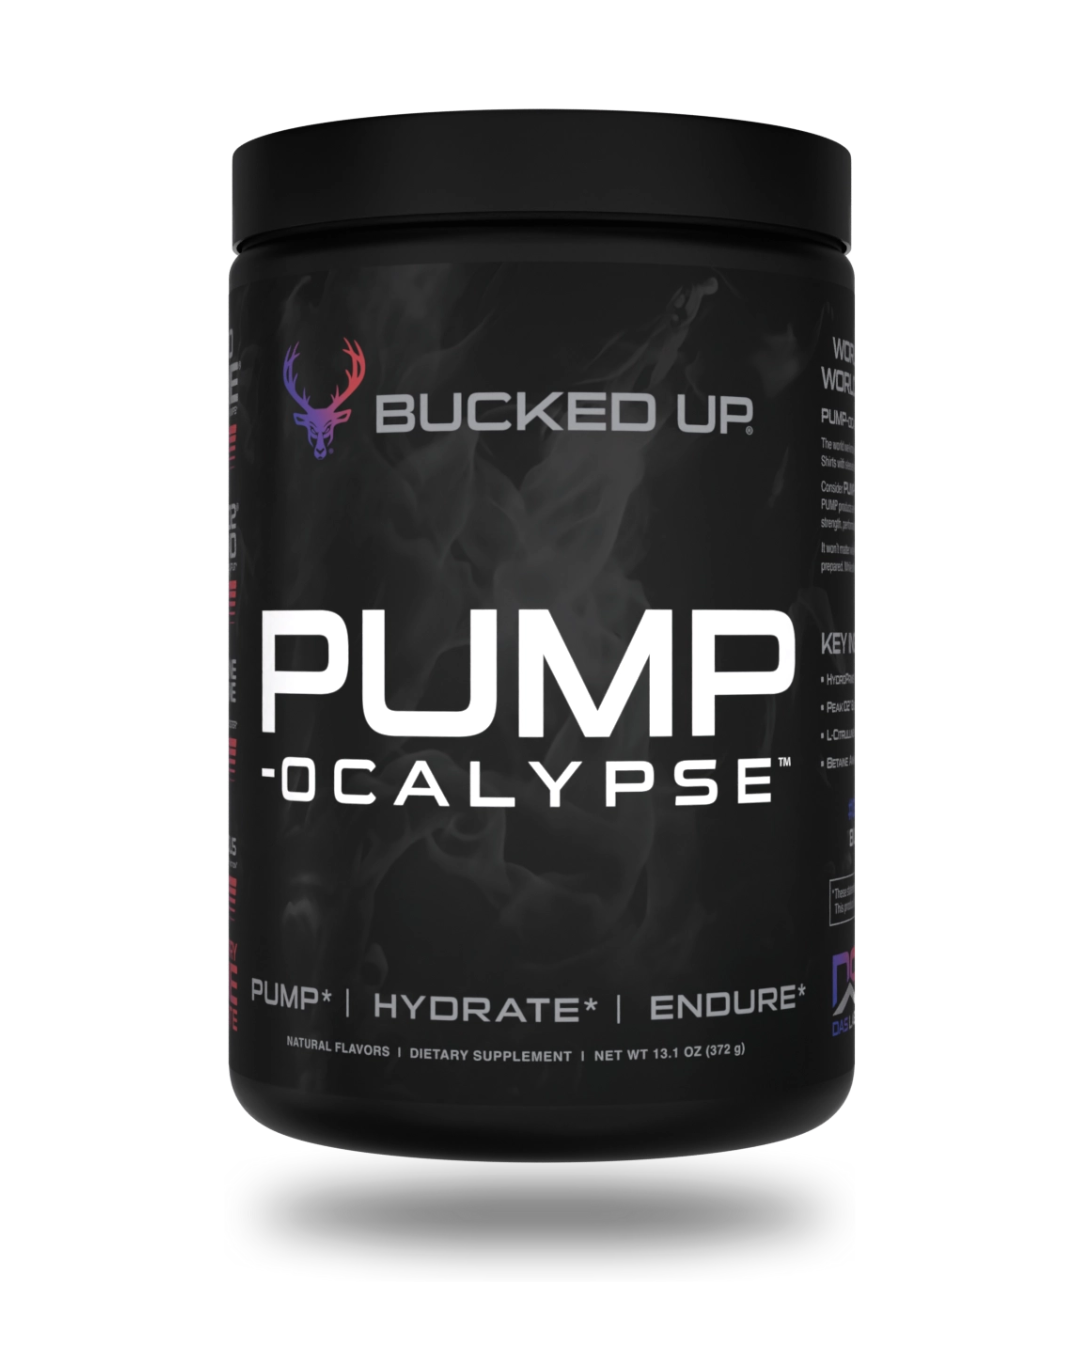 Bucked UP Pump OCALYPSE Pre Workout